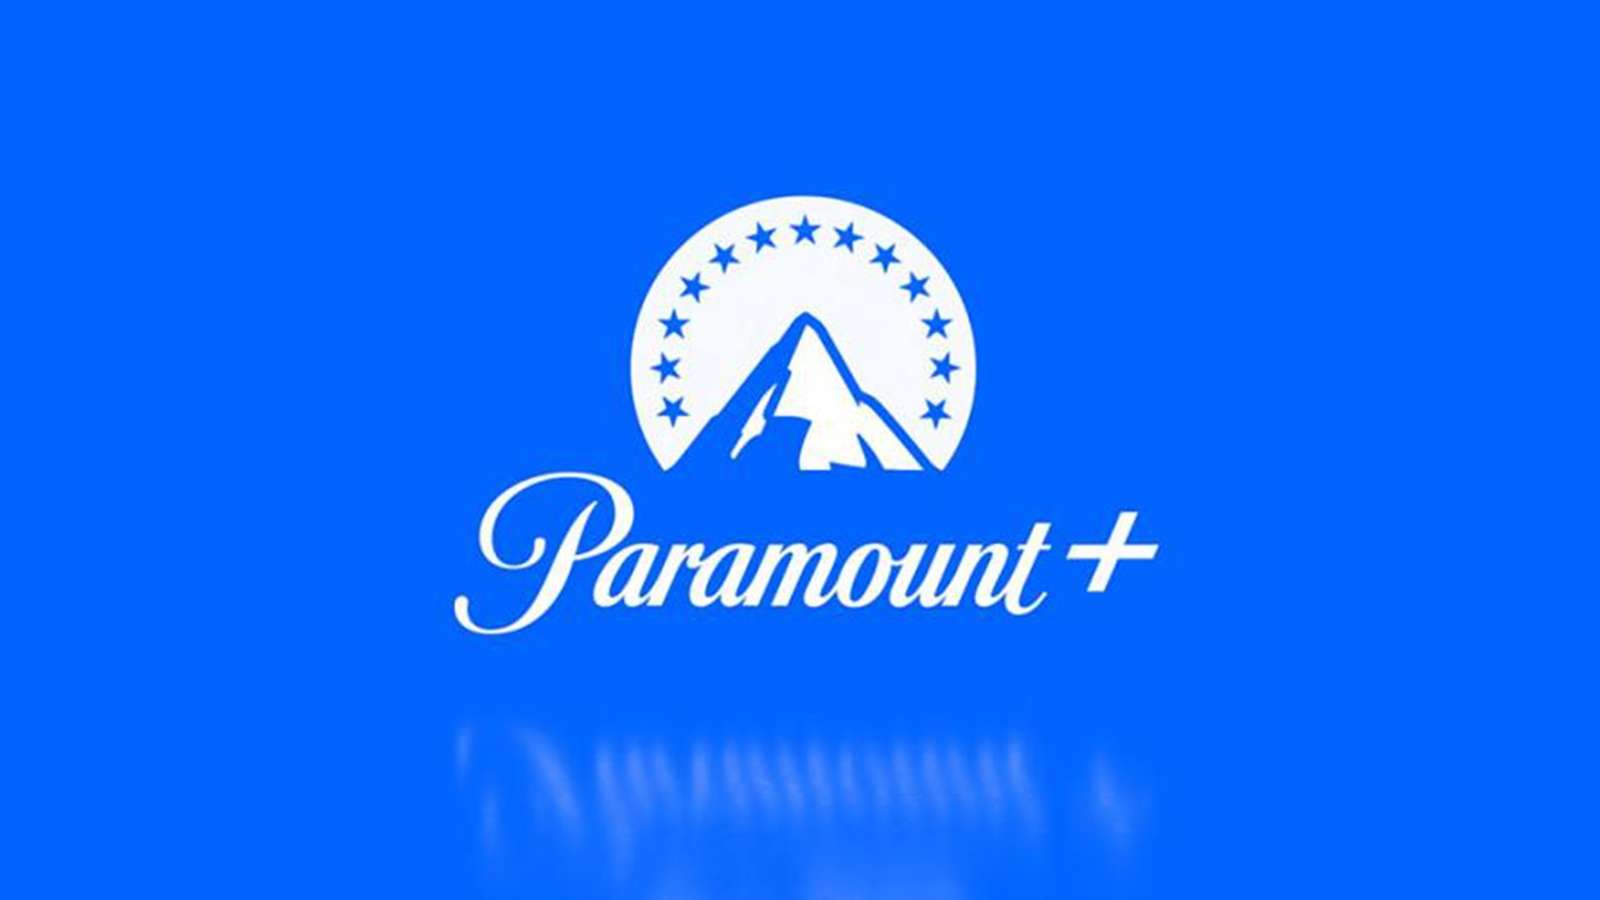 Paramount Plus Promo Panel logo